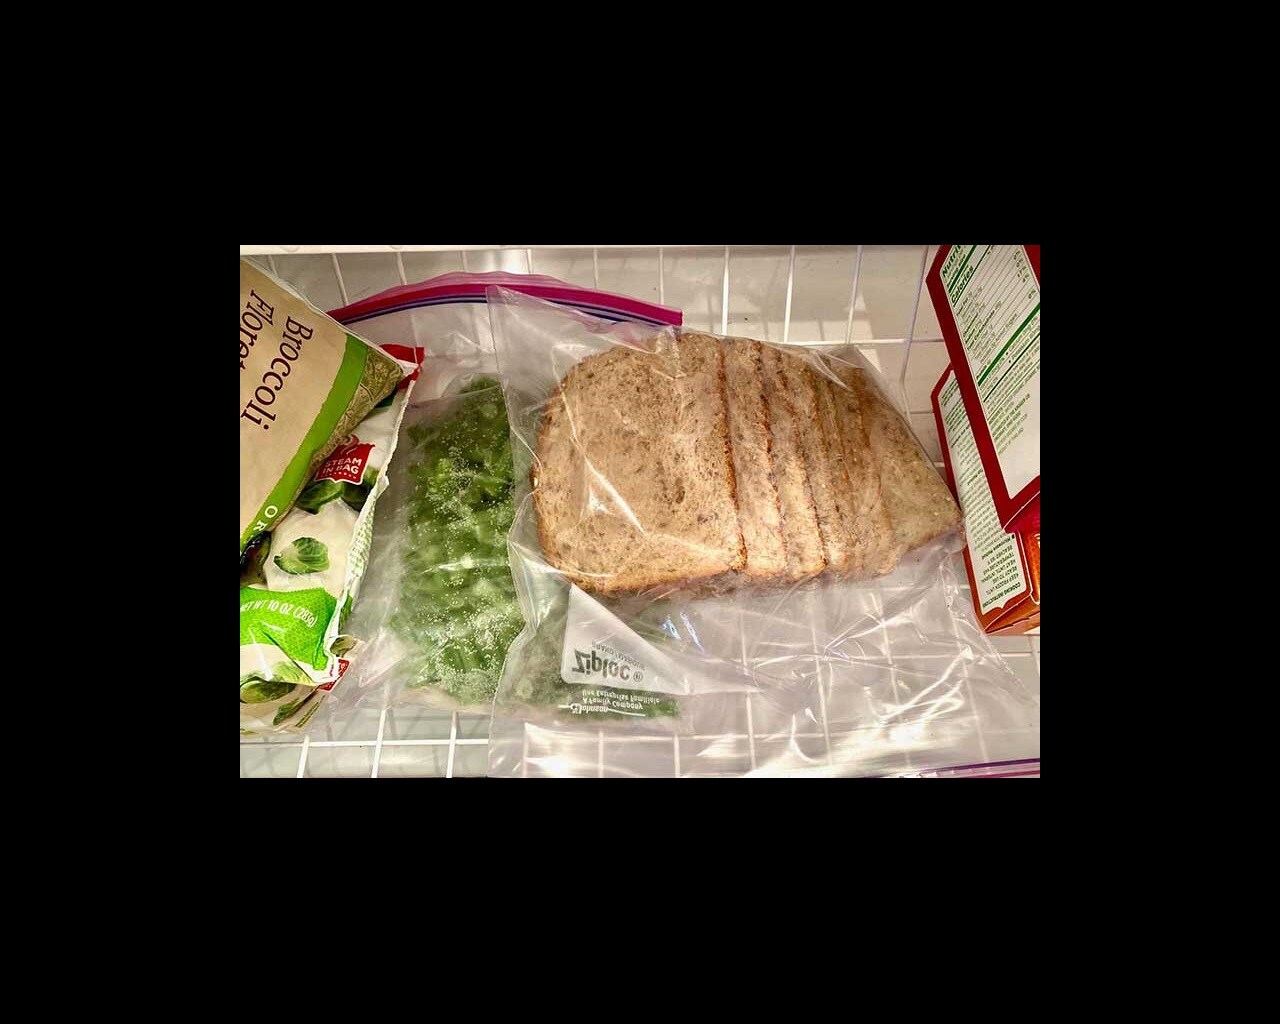 bread and veggies in freezer